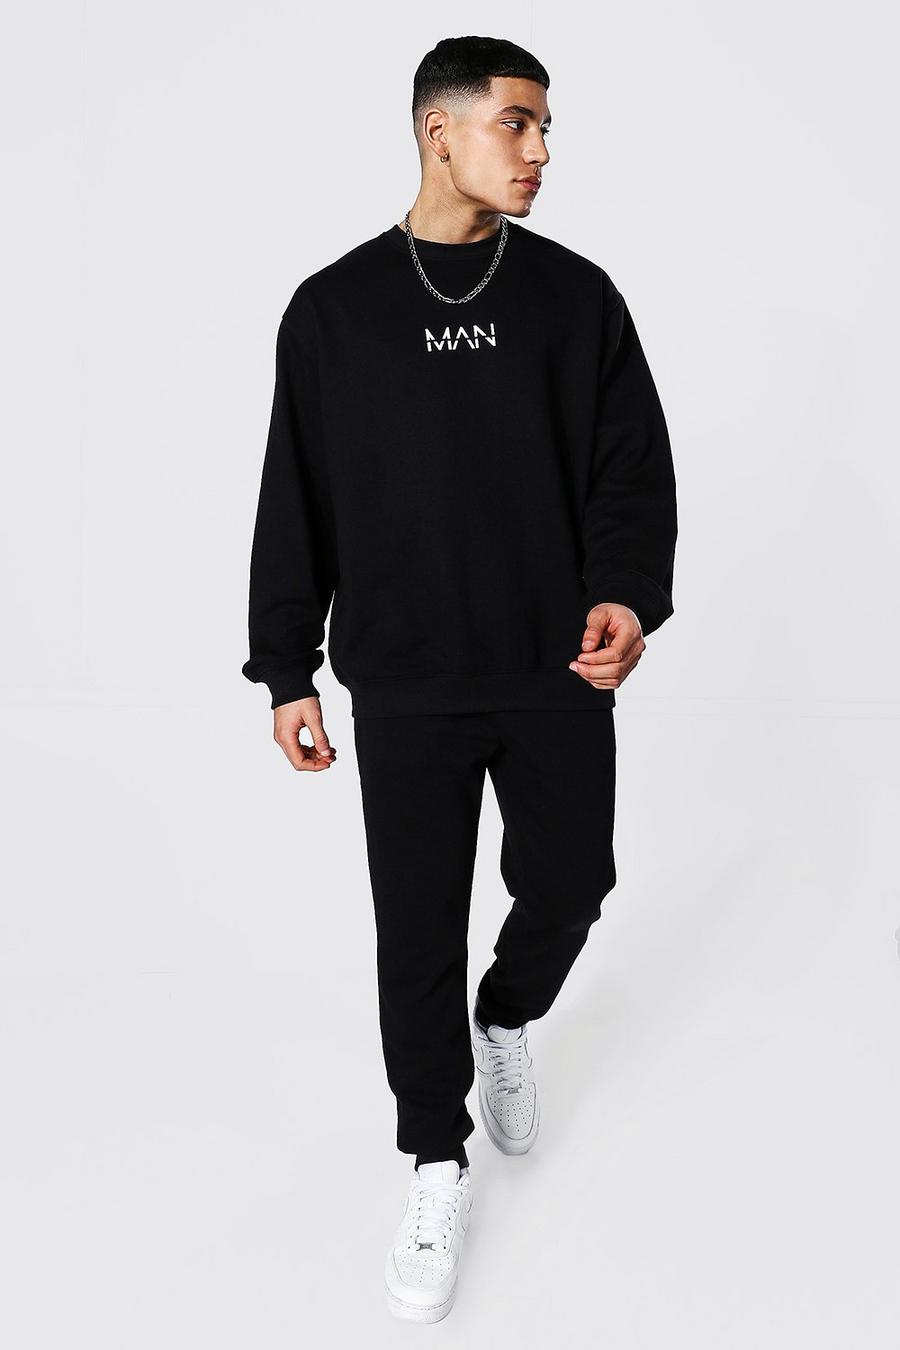 Black Oversized Original Man Sweater Tracksuit image number 1